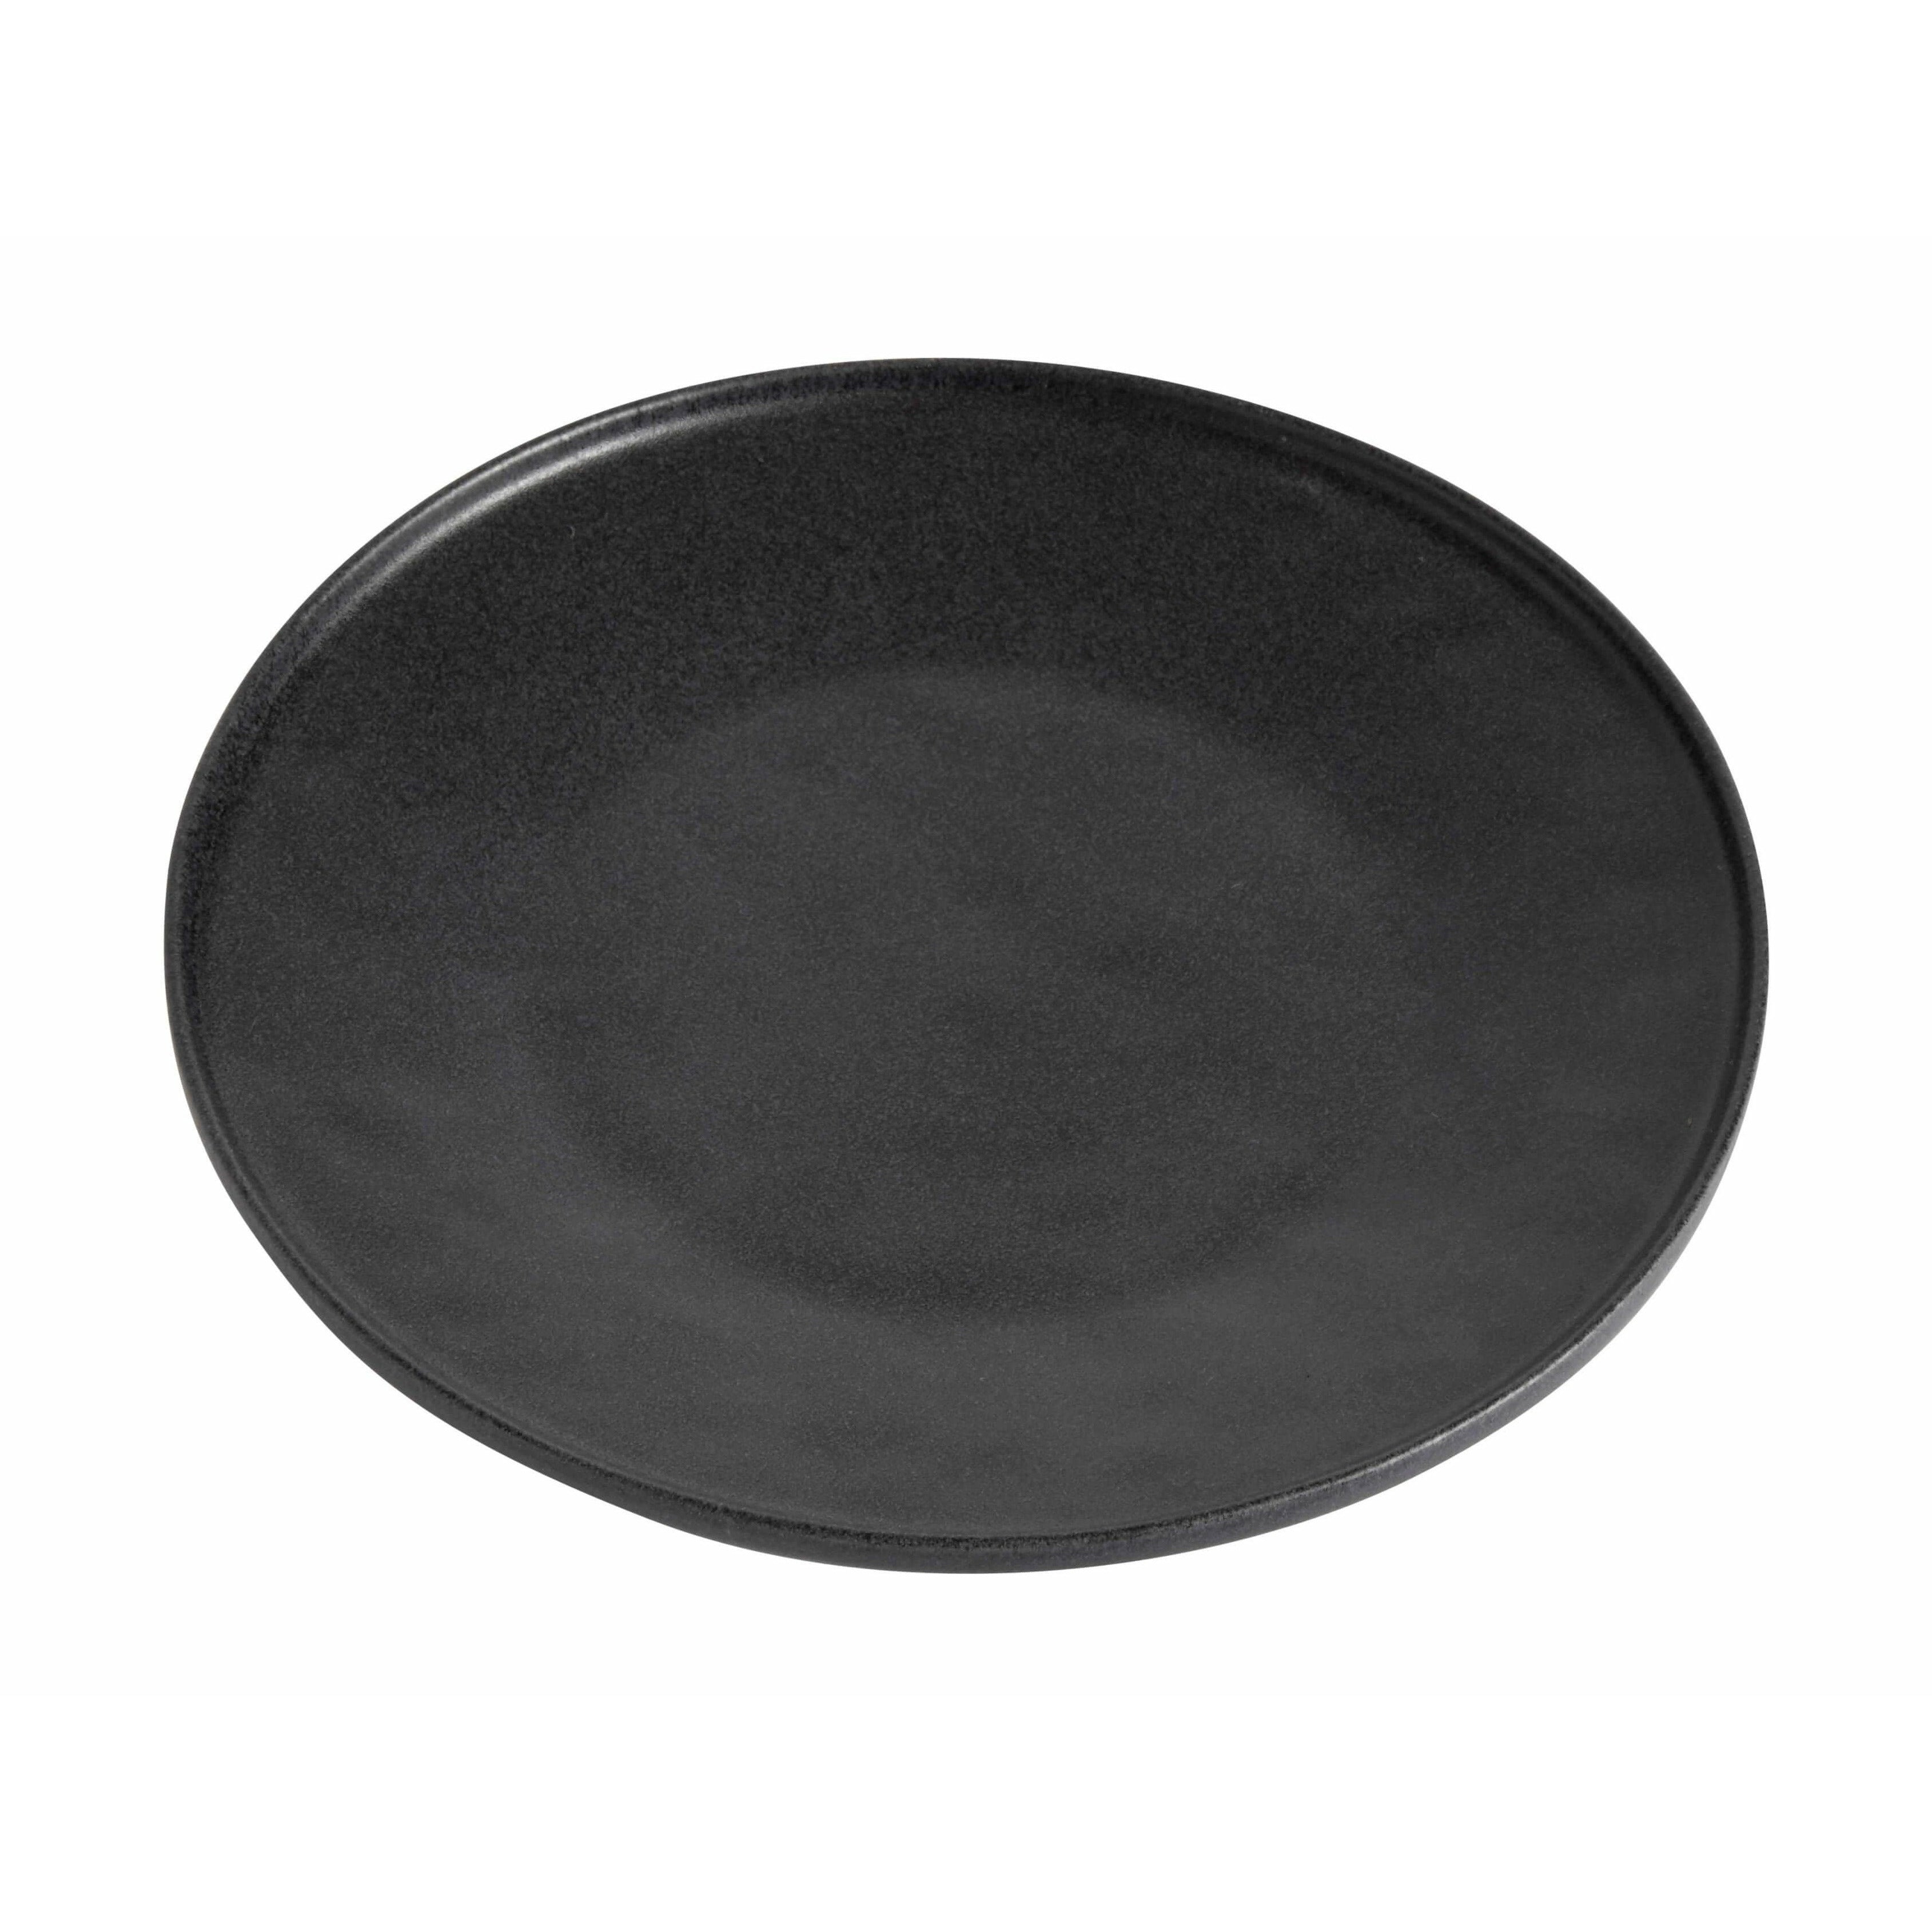 Muubs Ceto Cake Plate Black, 22 cm